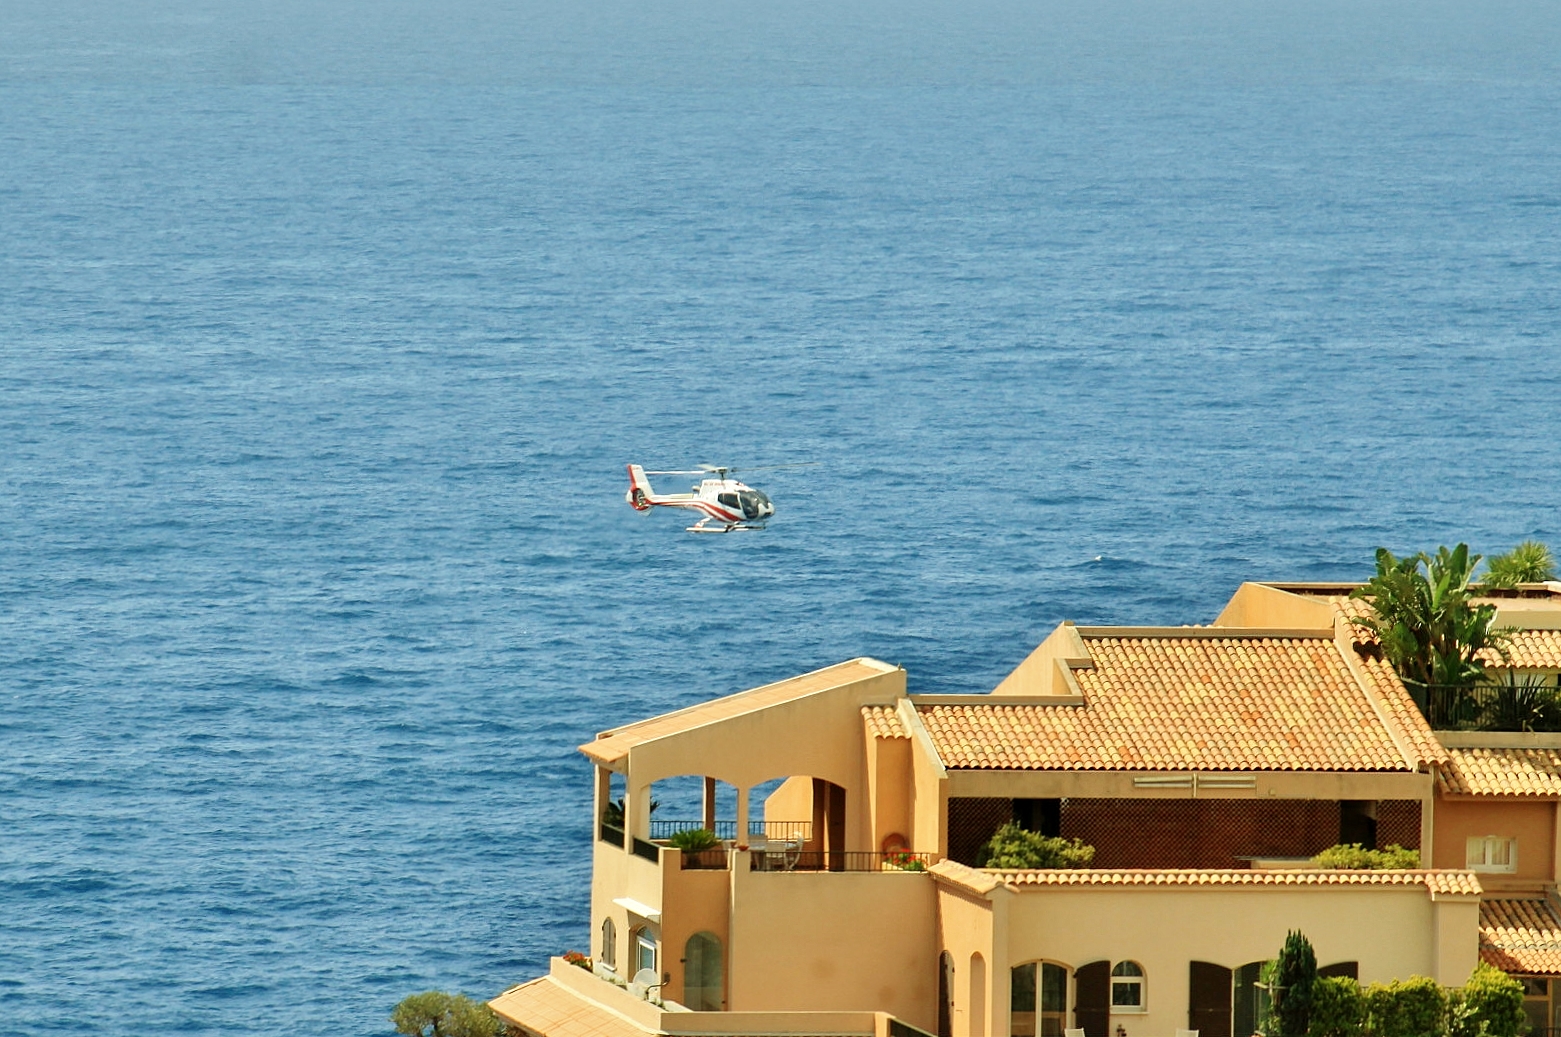 Foto: Helicoptero - Mónaco, Mónaco